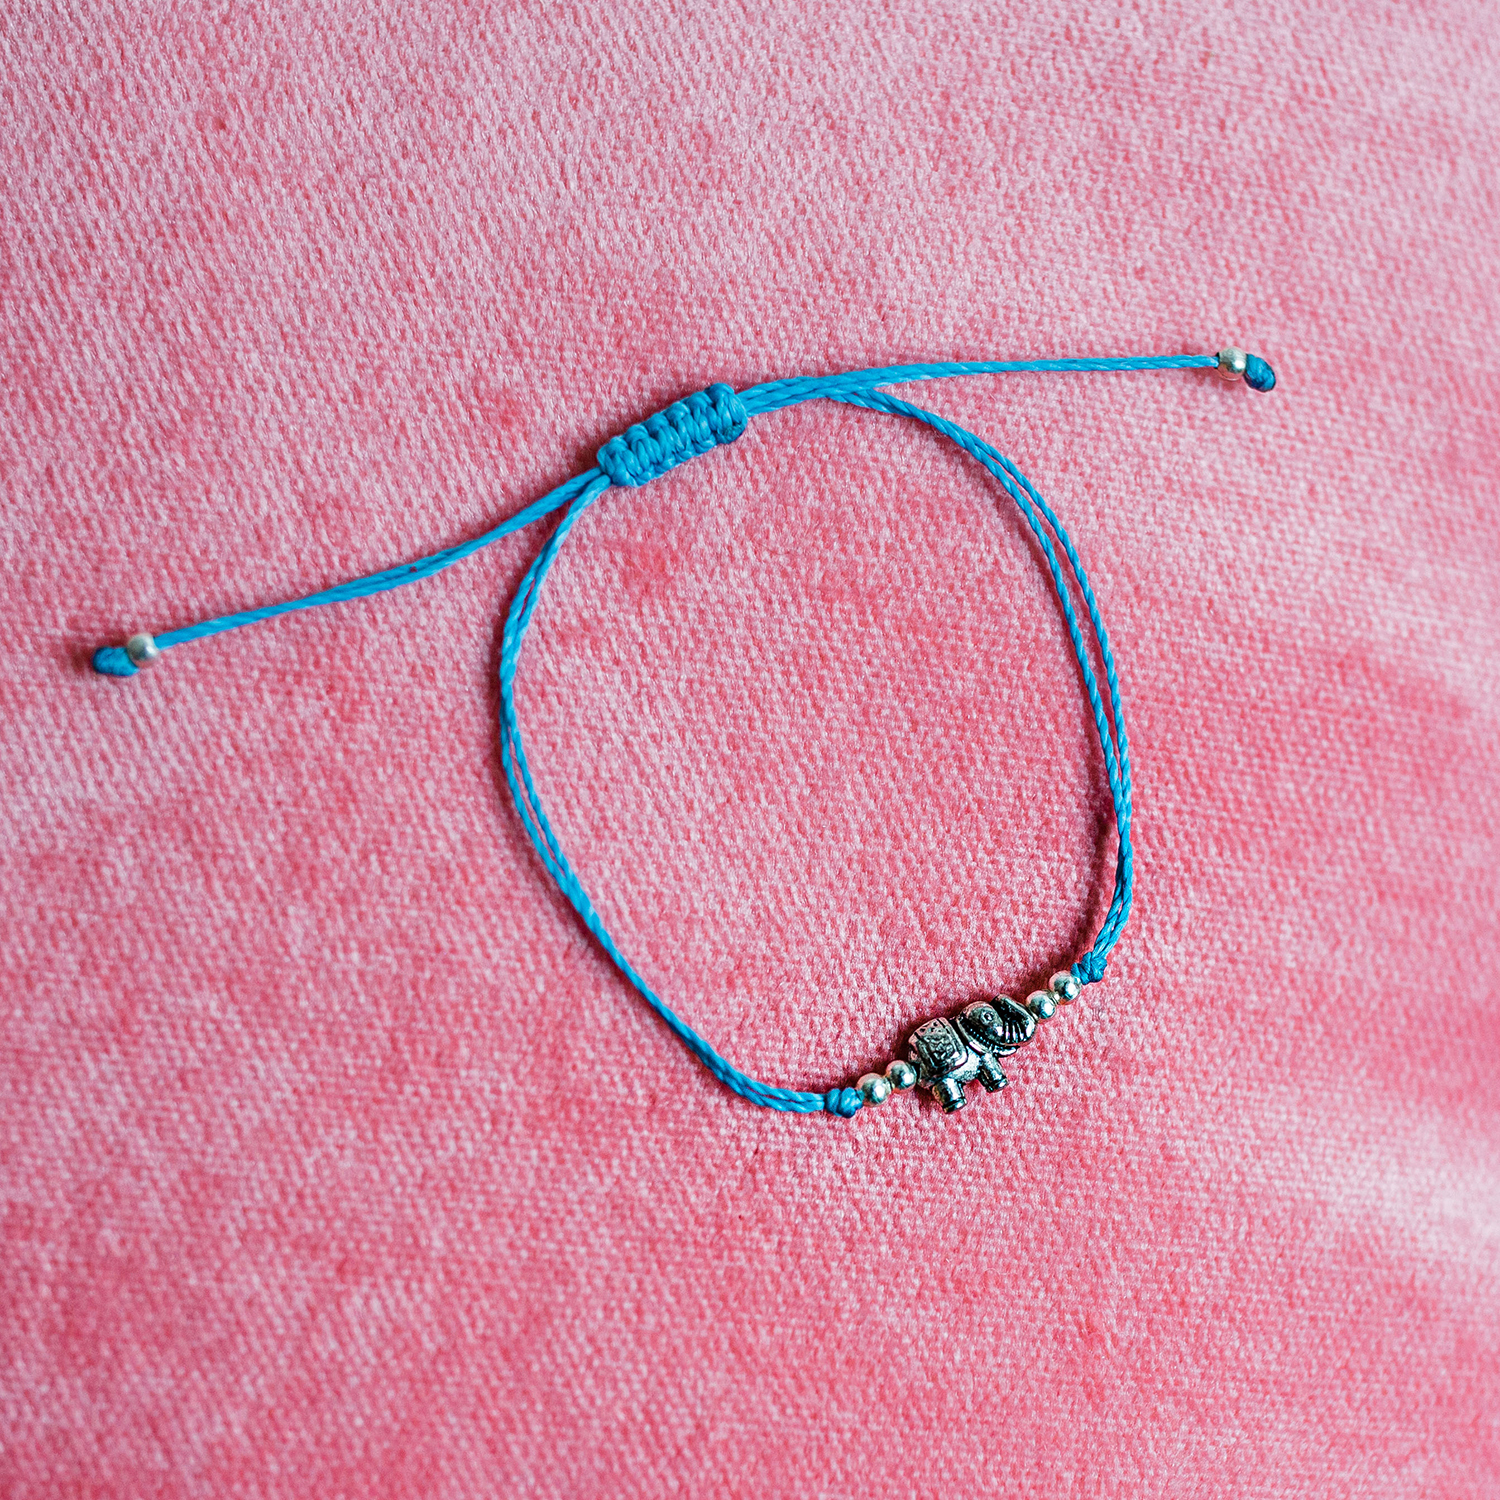 Elephant Charm String Bracelet- Red String Bracelet